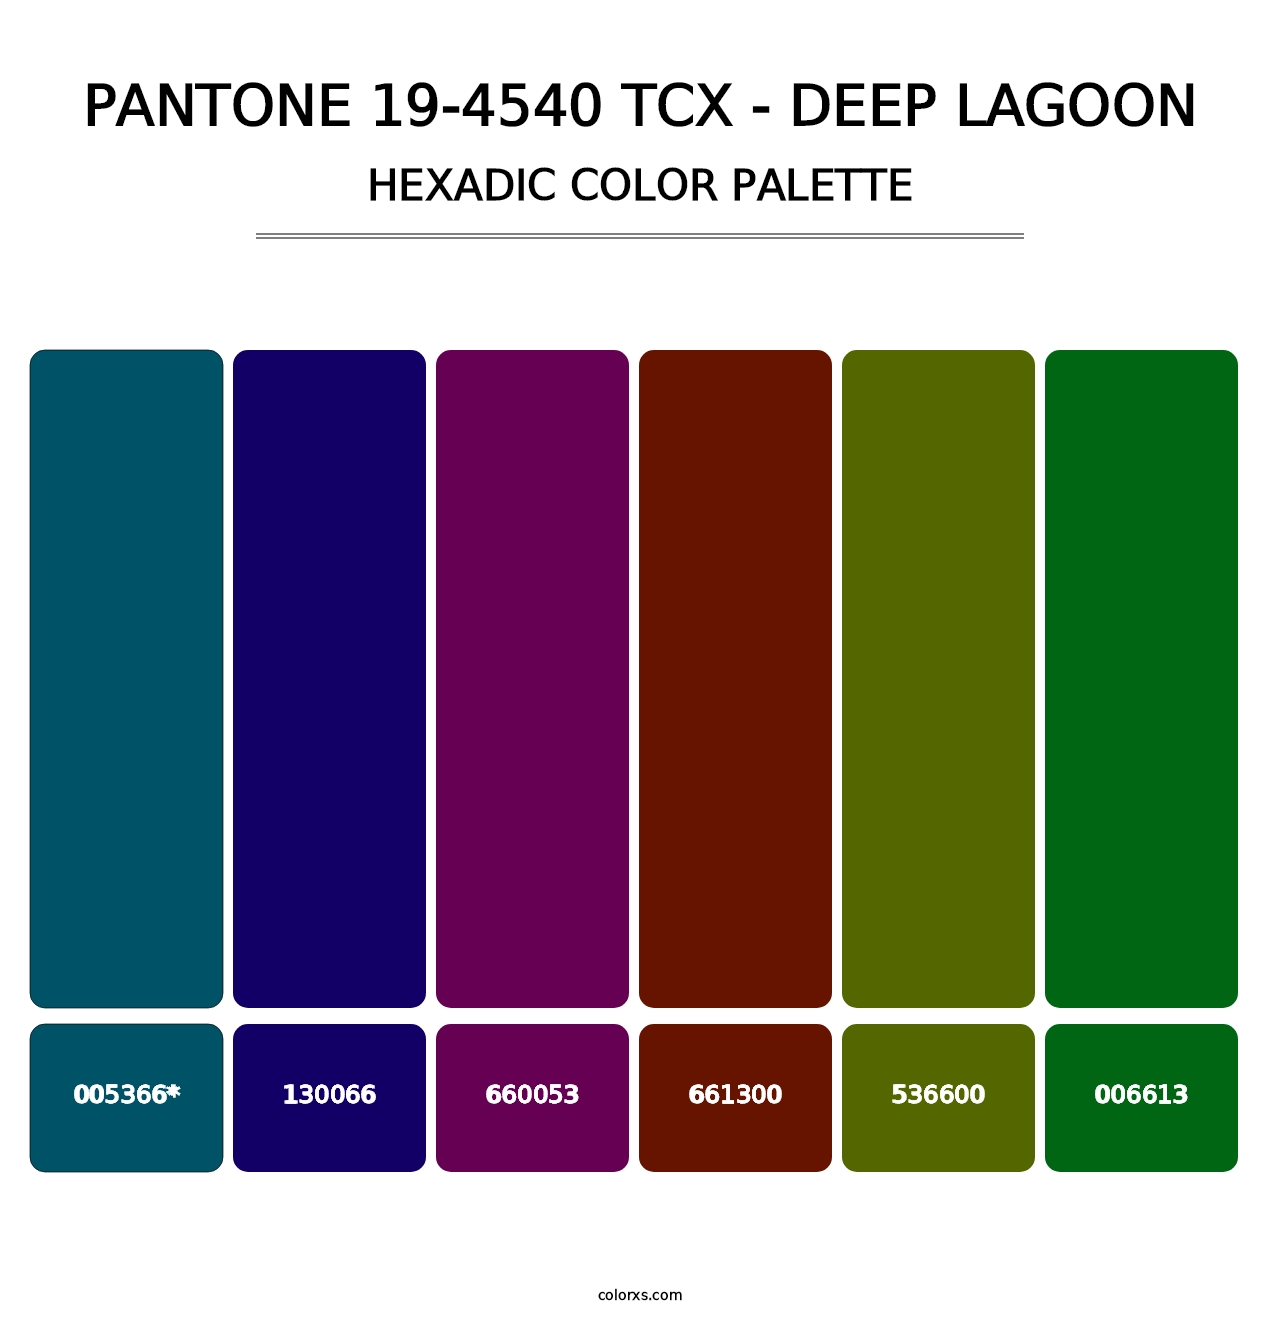 PANTONE 19-4540 TCX - Deep Lagoon - Hexadic Color Palette